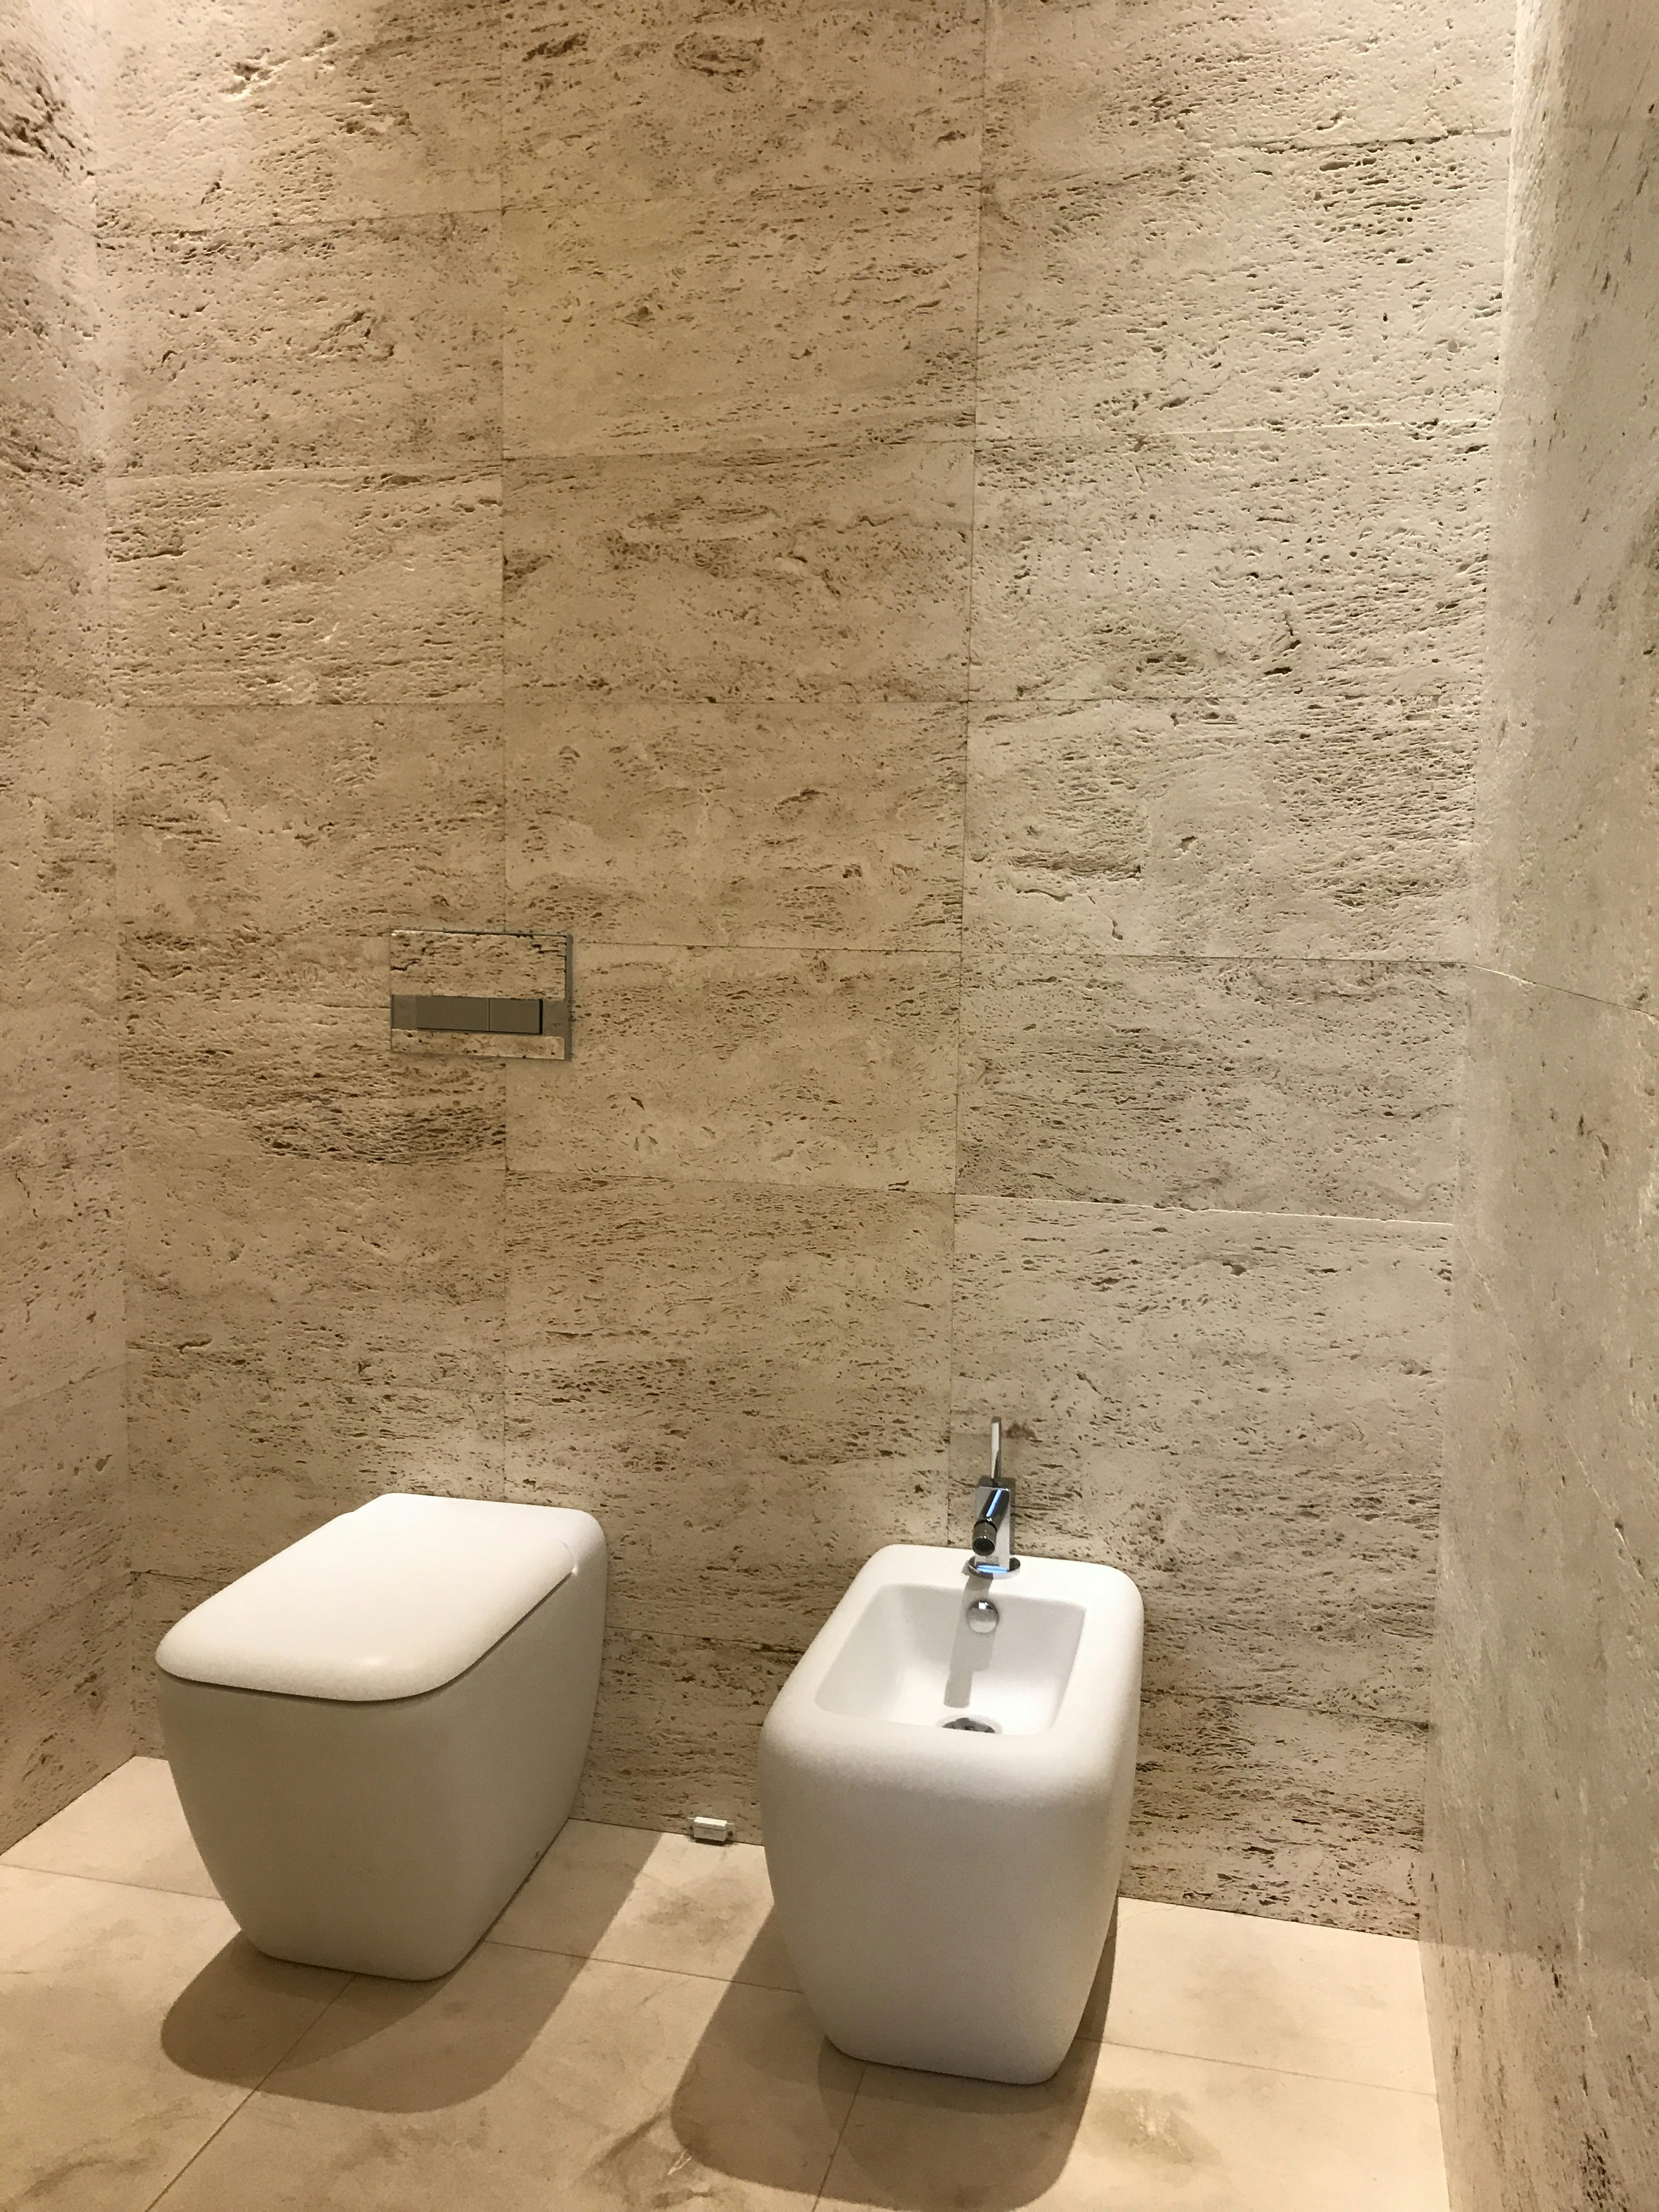 Bidet toilet seat installation for modern bathroom